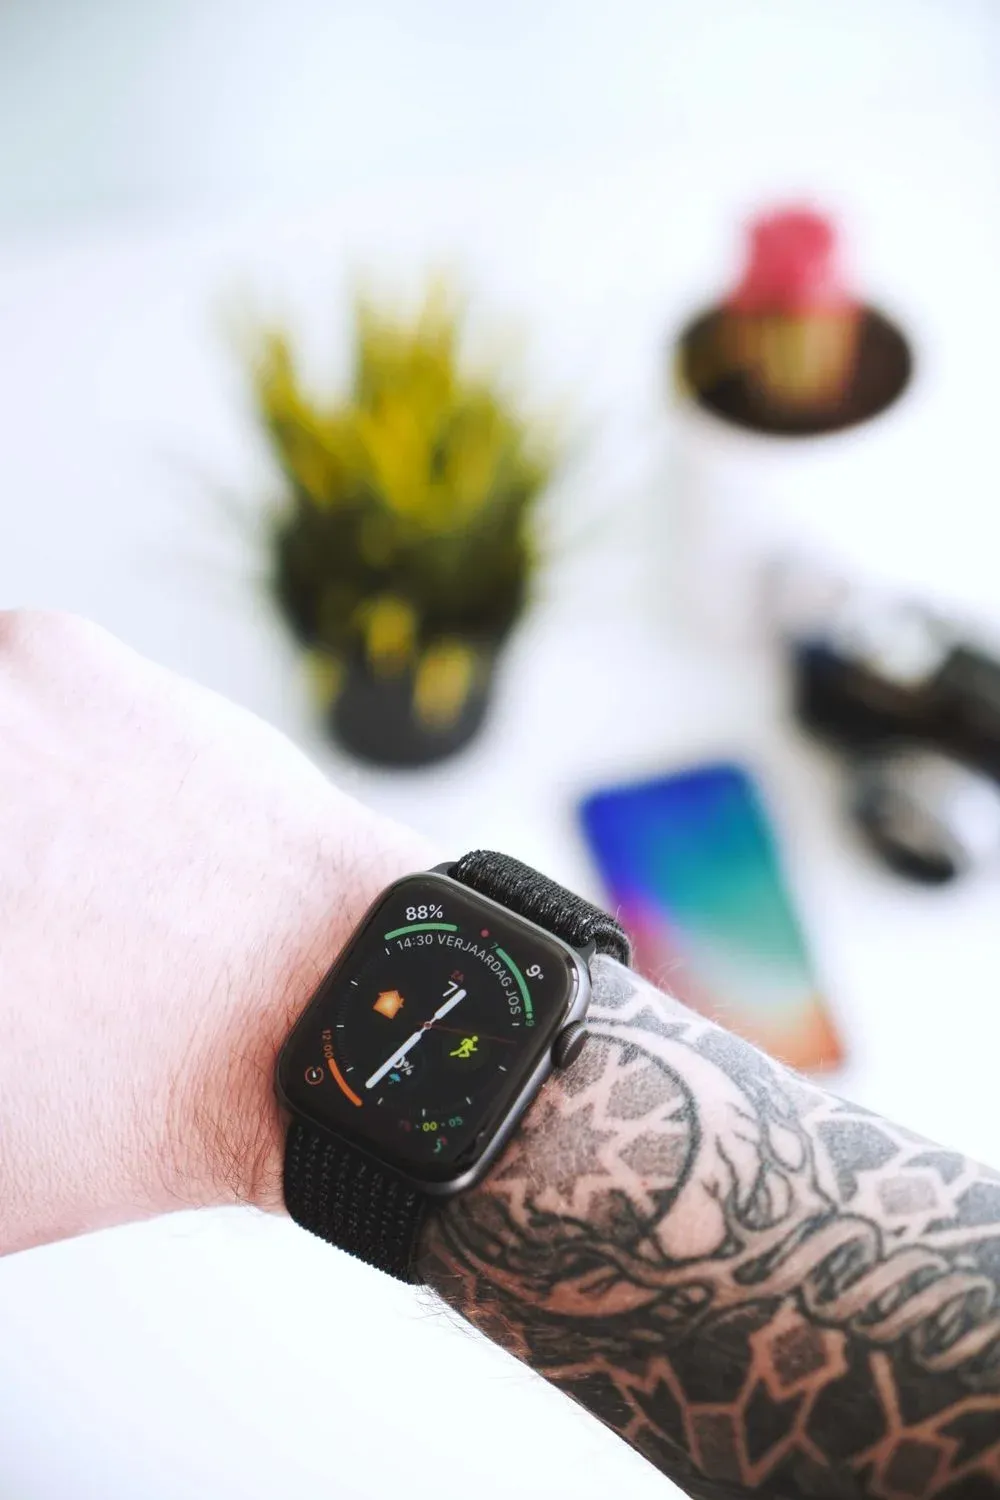 Do Apple watches work on a tattooed wrist?